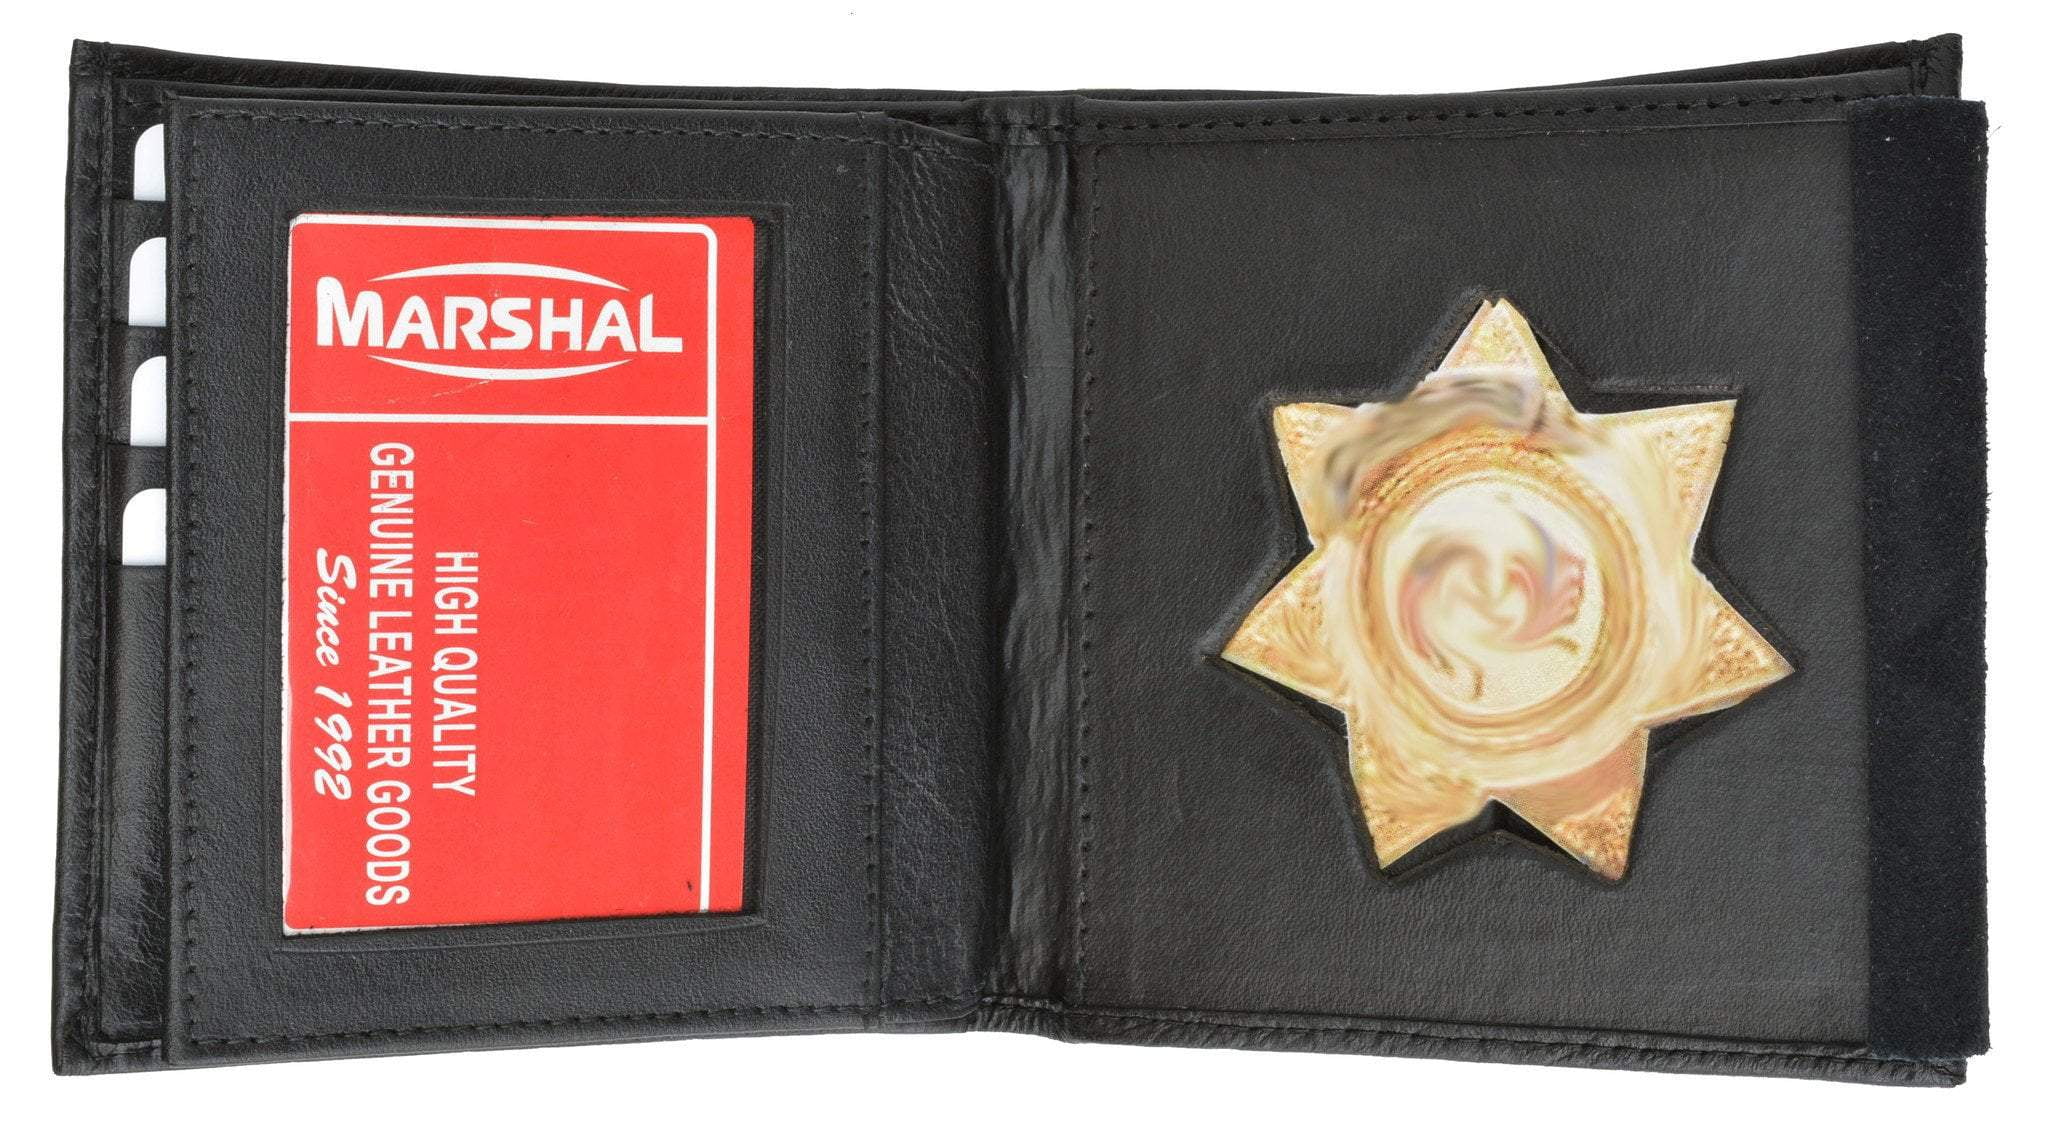 ASR Federal Law Enforcement Neck Chain Universal Badge Holder